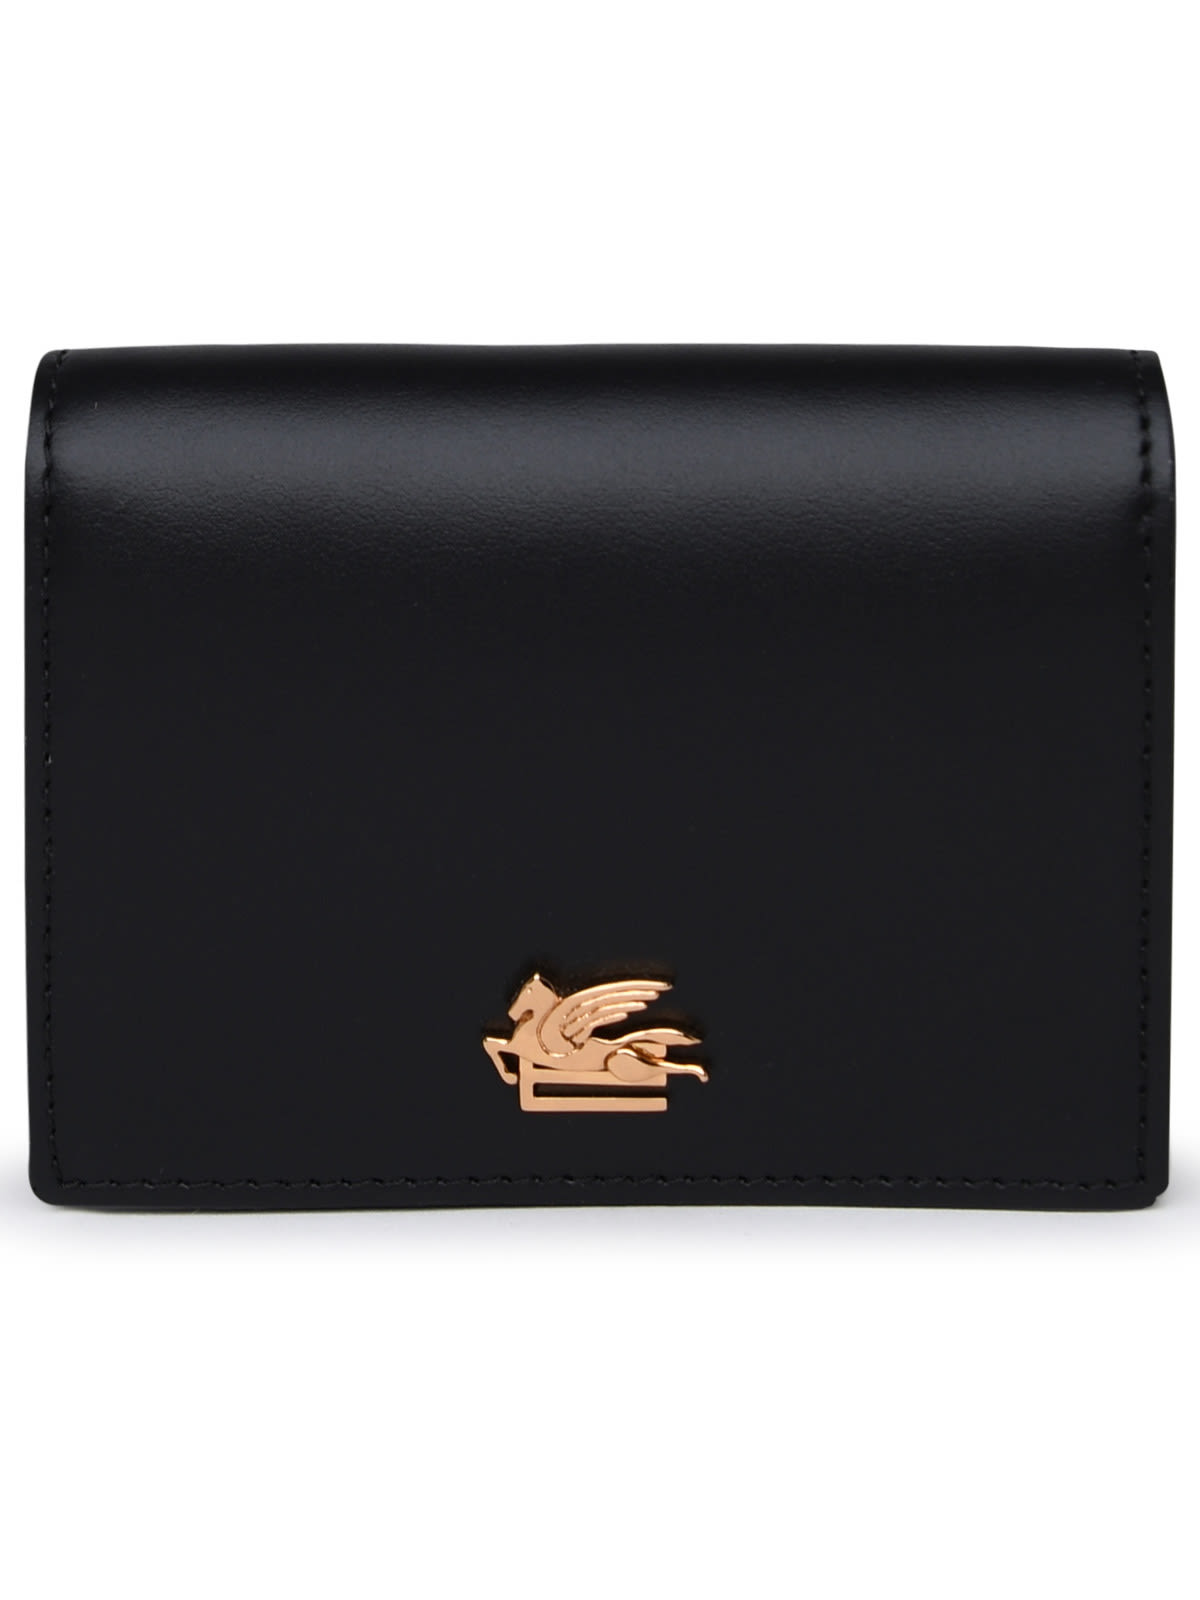 Etro Black Leather Wallet